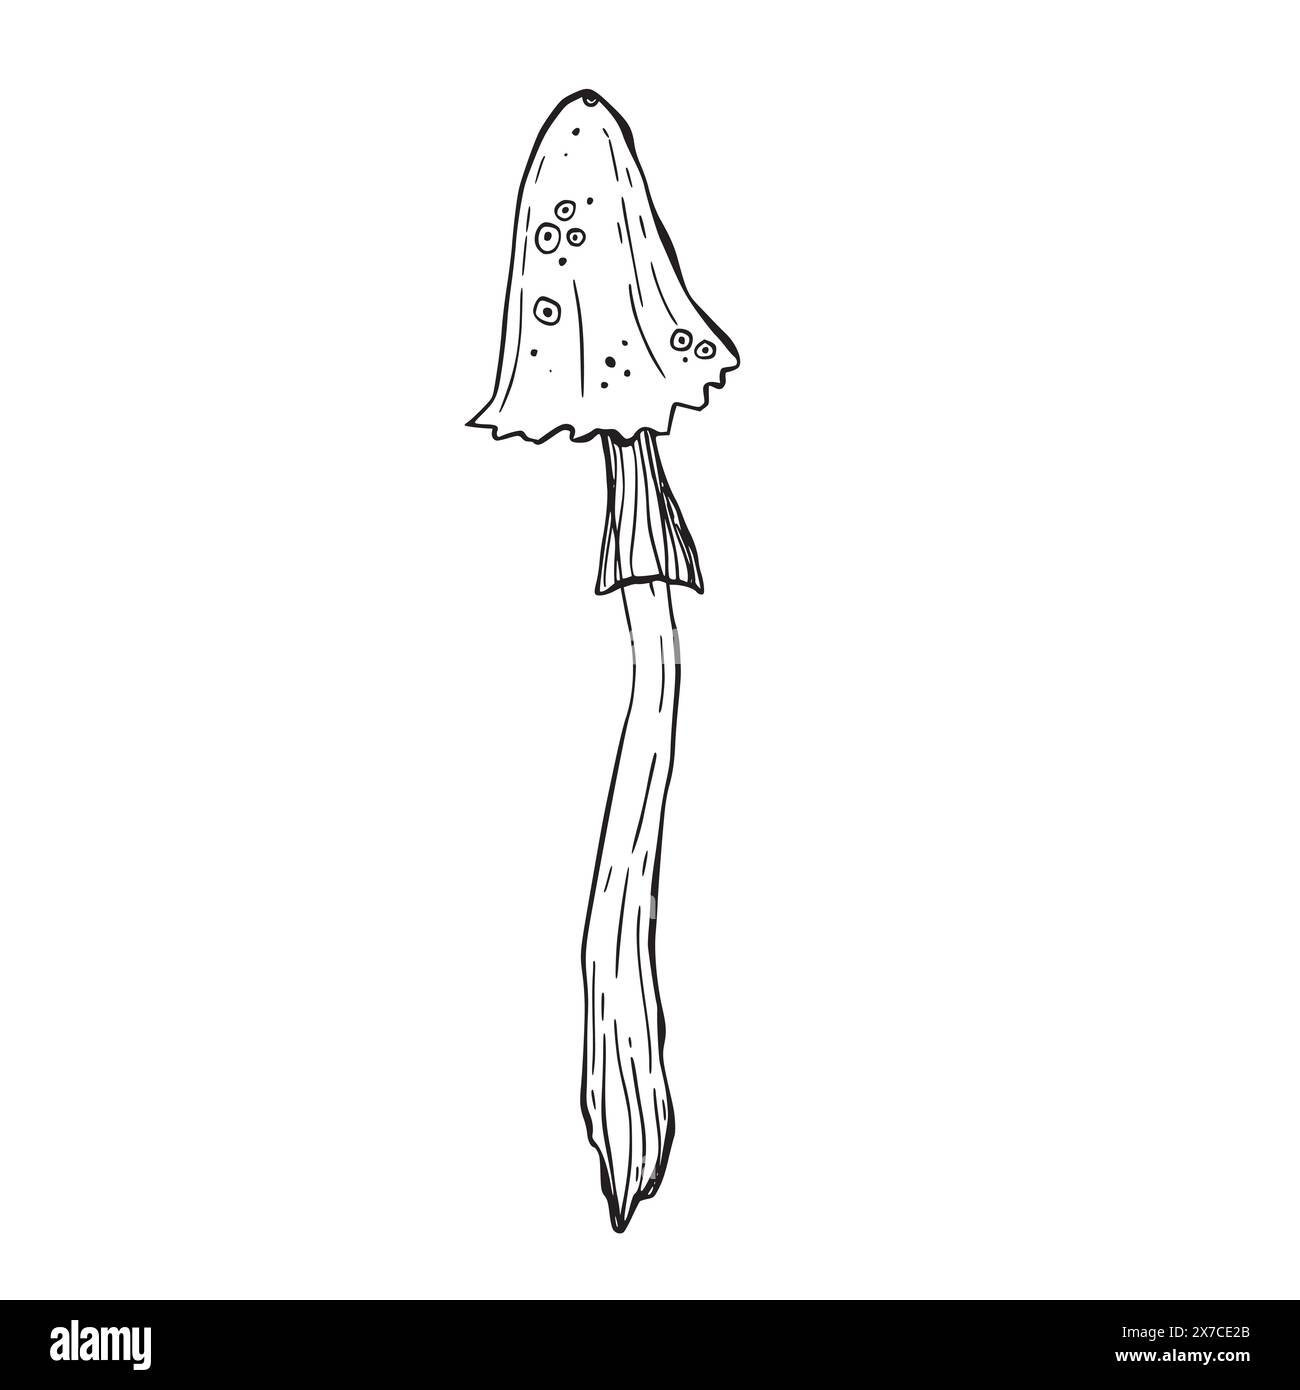 lineart magic poisonous mushroom element. Tattoo fungus design, trendy romance symbol. Witch amanita mushrooms for Halloween. Vector sketch toadstool Stock Vector